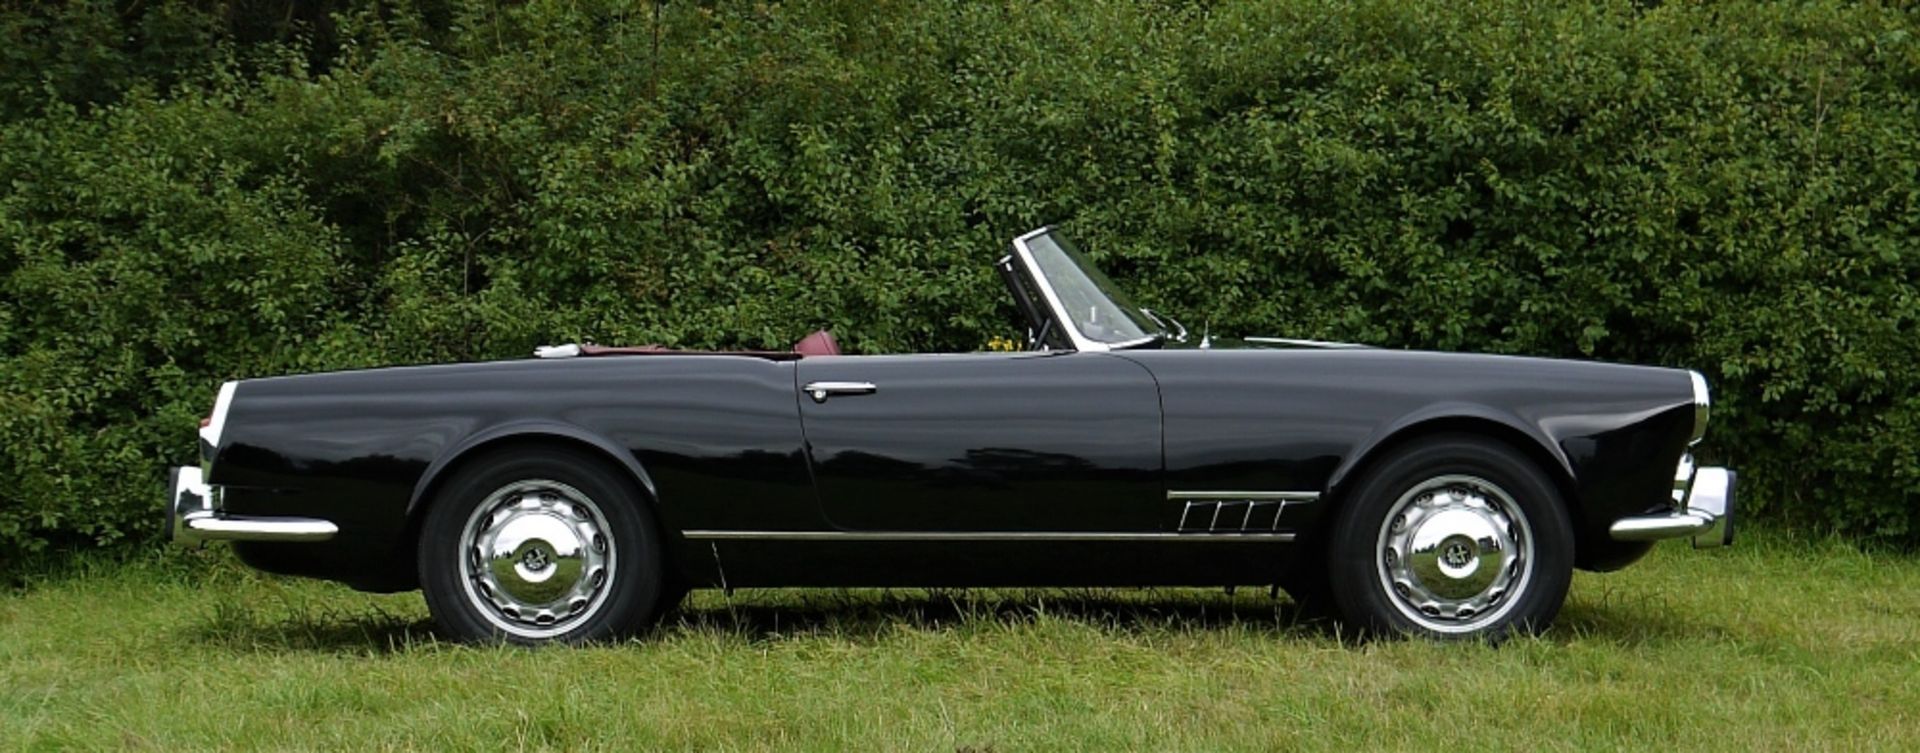 1960 ALFA ROMEO TOURING SPIDER Registration Number: 307 XVJ Chassis Number: AR*10204*000517 Recorded - Bild 5 aus 36